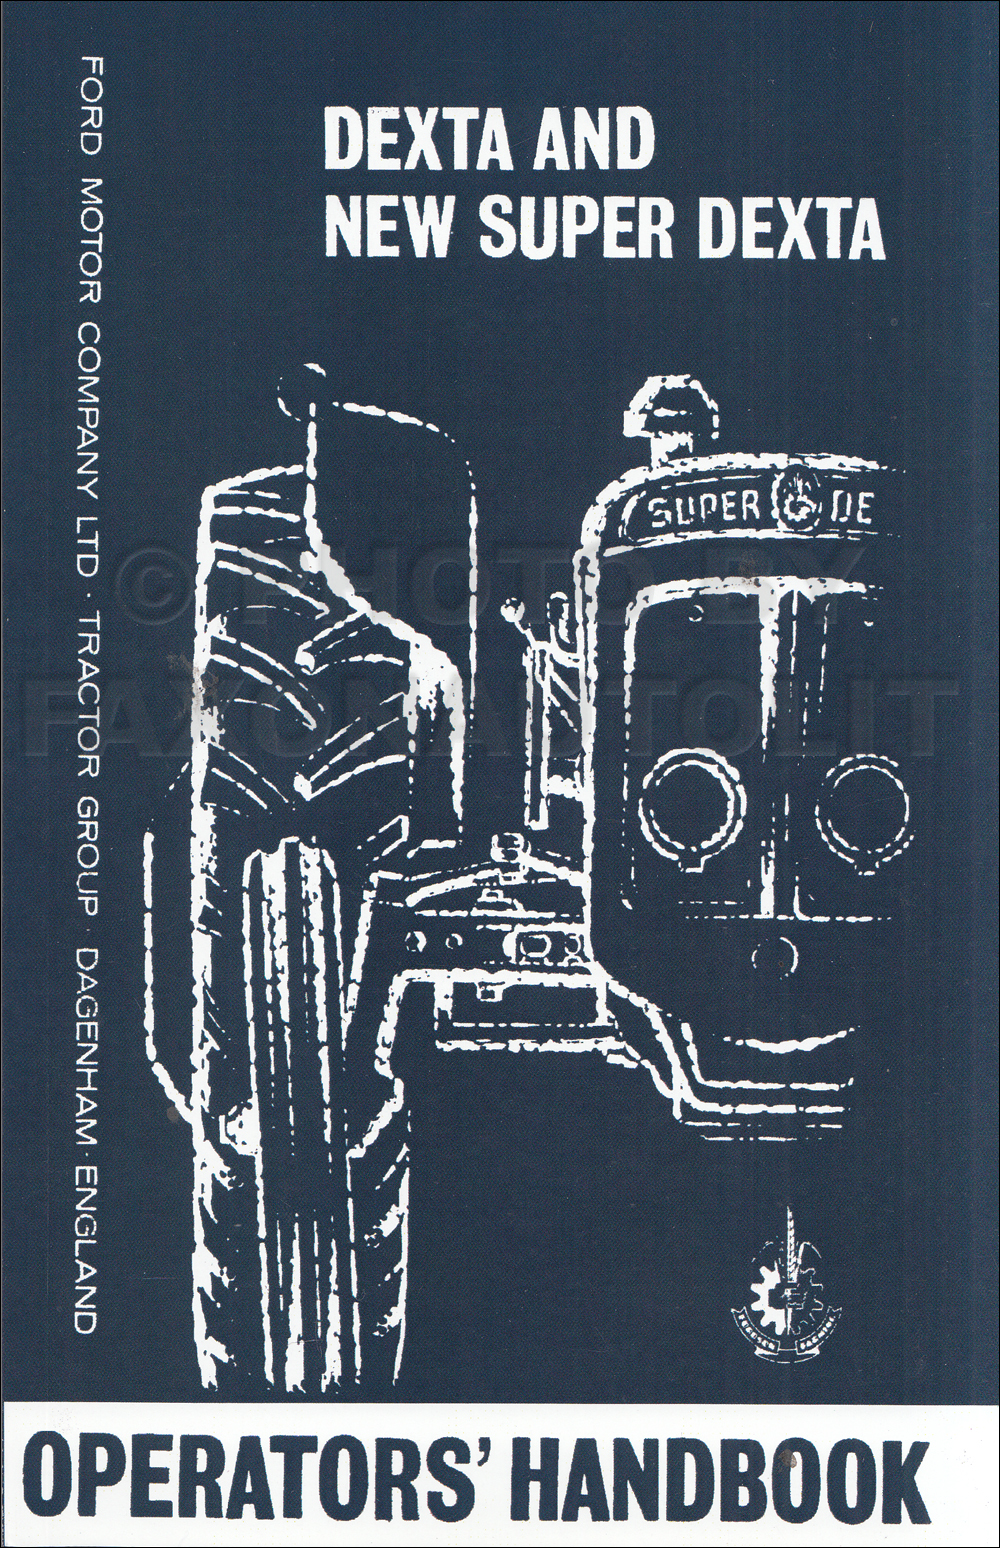 Fordson /"Dexta/" Tractor Workshop Manual Book